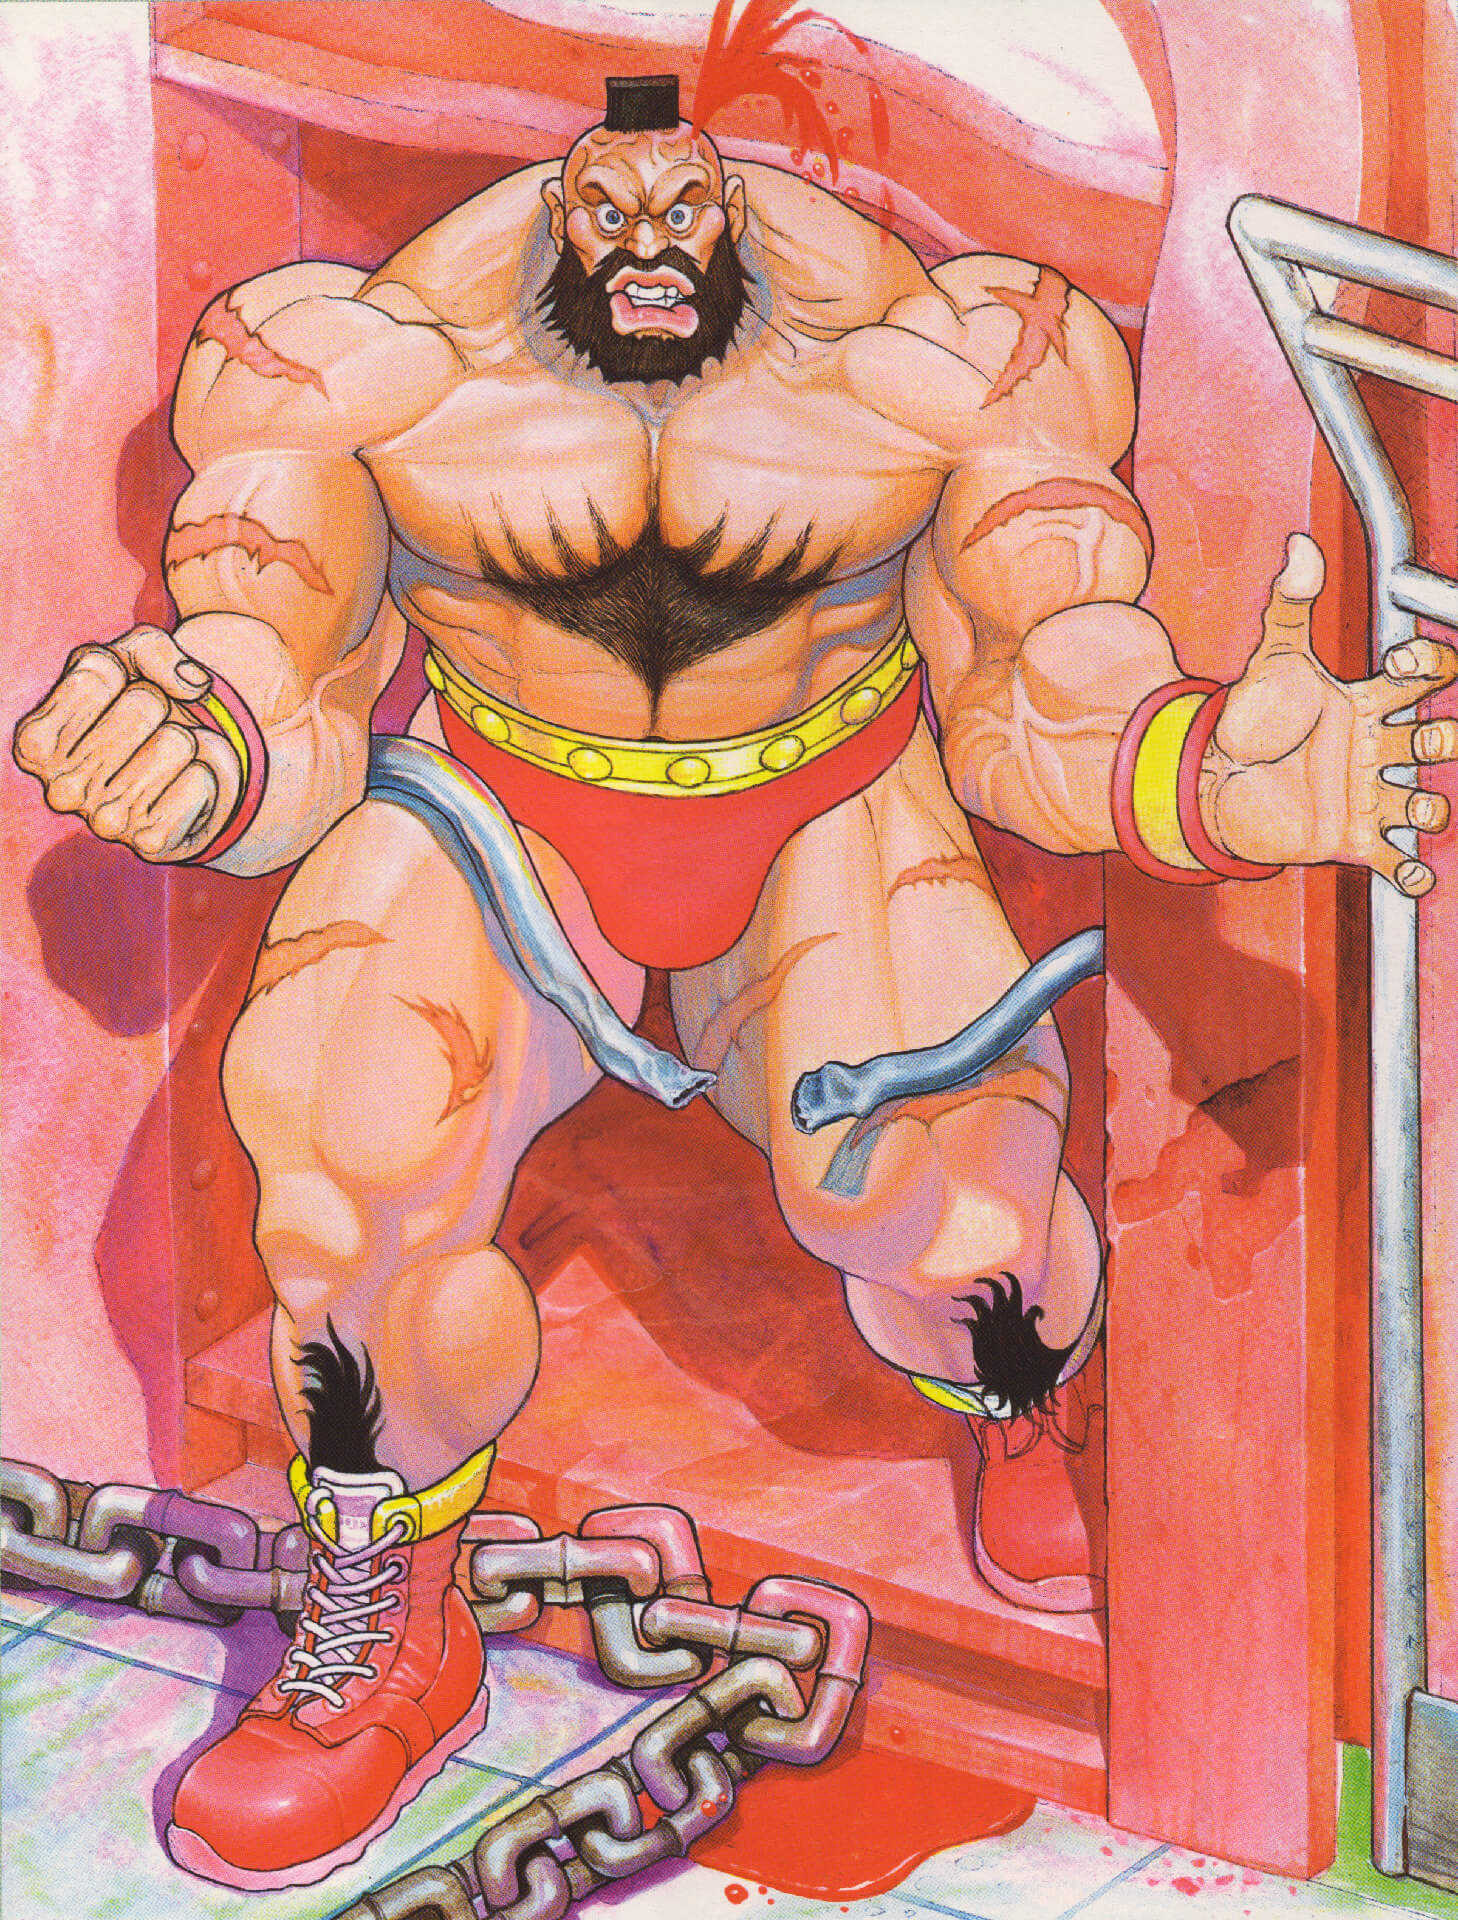 Zangief Imagens do personagem, Images, Street Fighter II, Museu